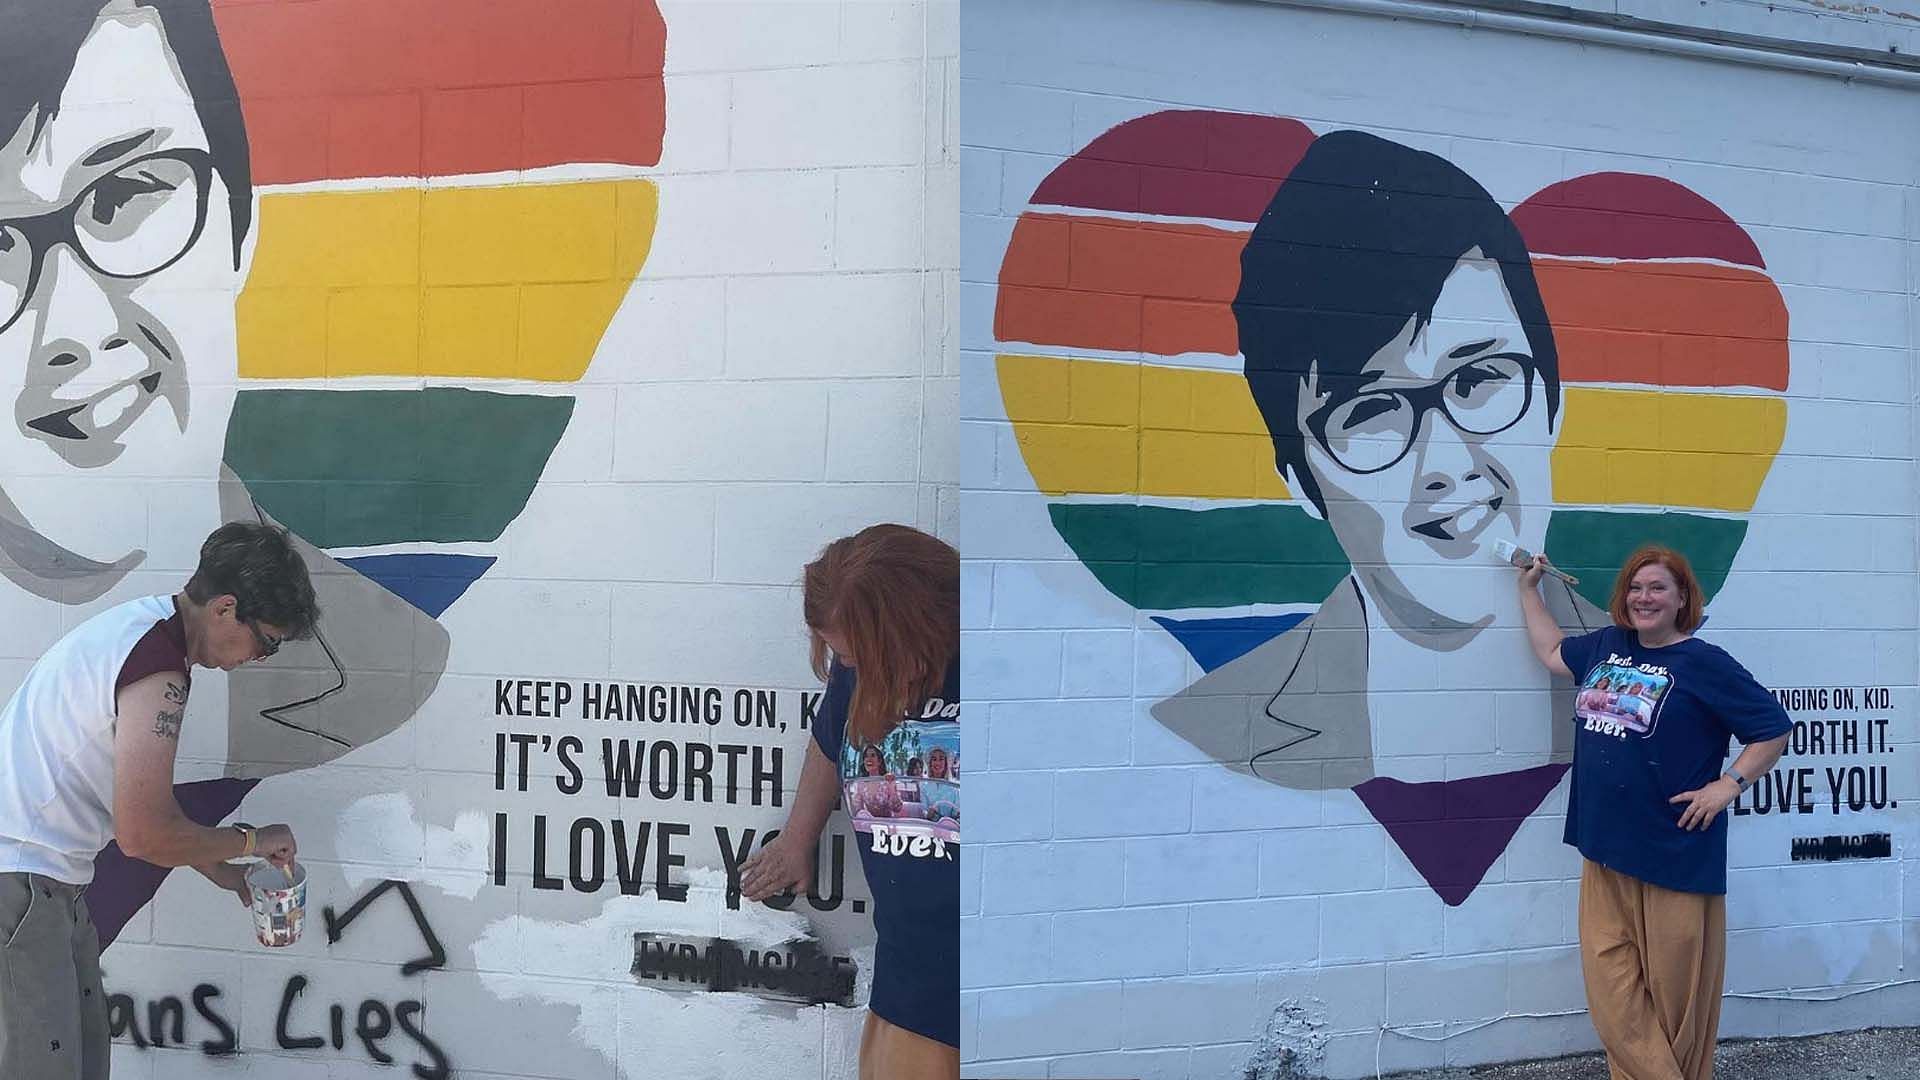 Two LGBTQ+ murals defaced in Orlando leaving netizens distressed (Image via Instagram/@annaforflorida)